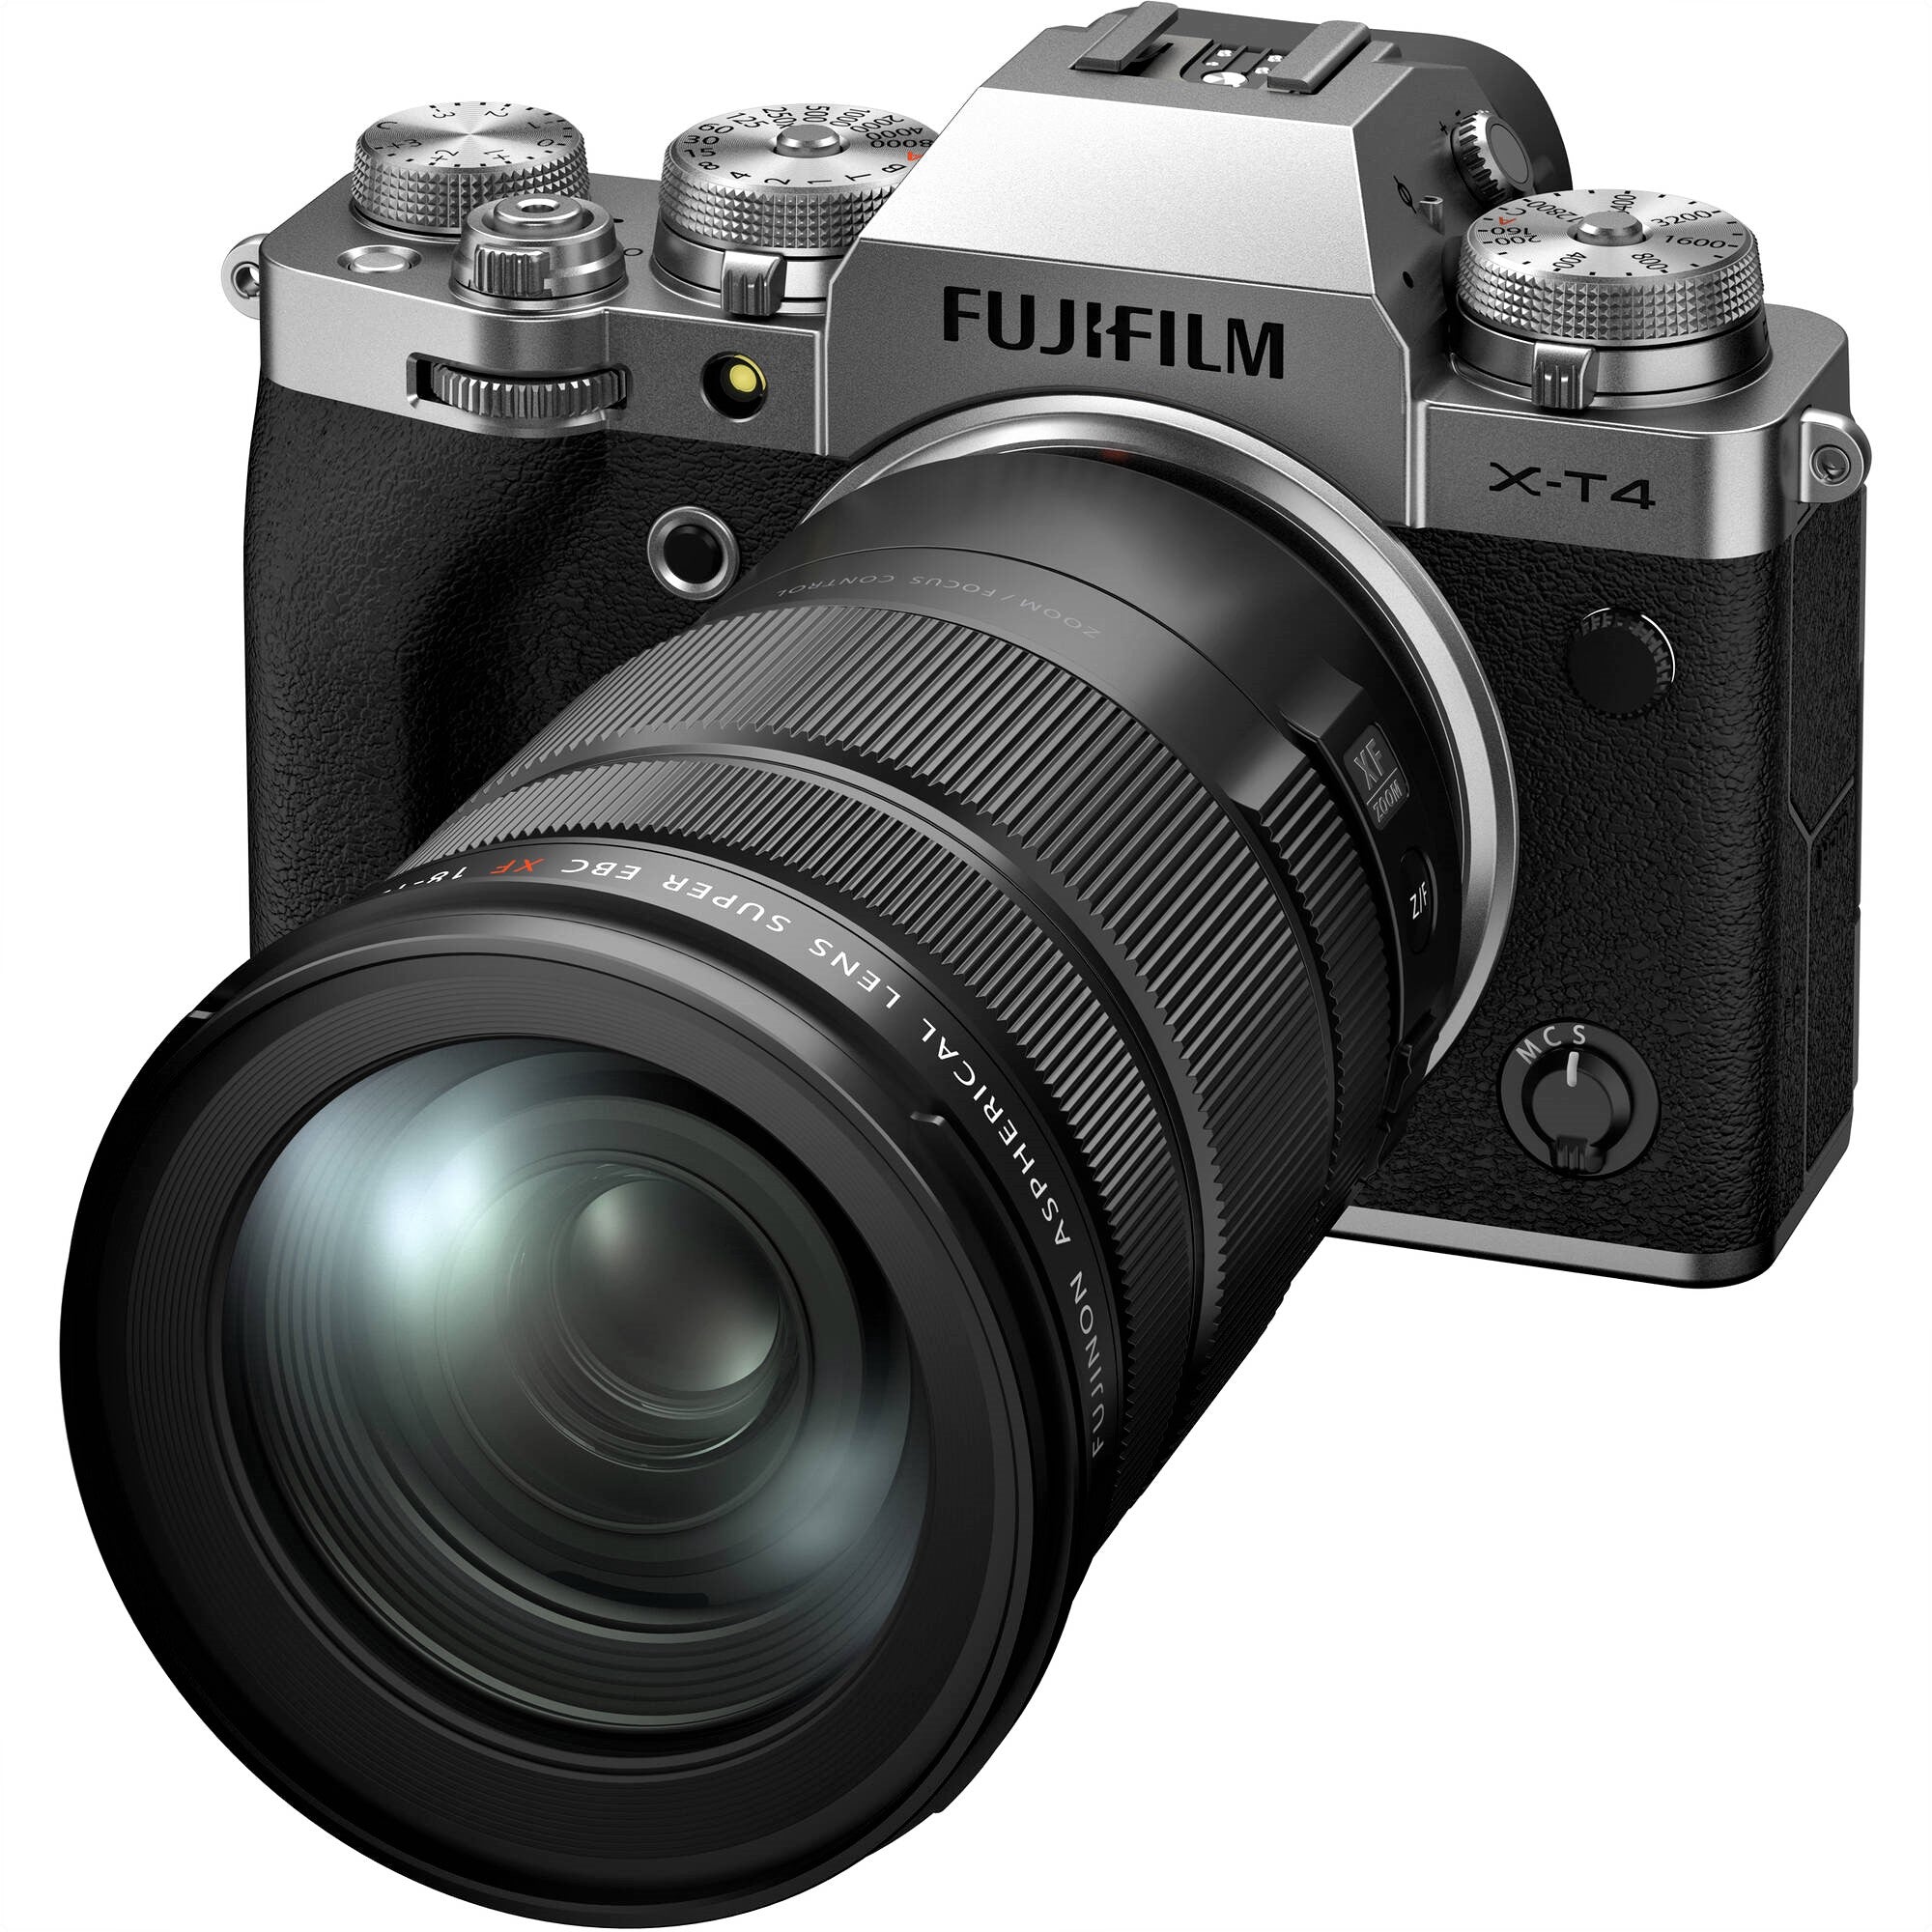 FUJIFILM XF 18-120mm f/4 LM PZ WR Lens - Attached Camera Not Included (Fujifilm Silver Camera)